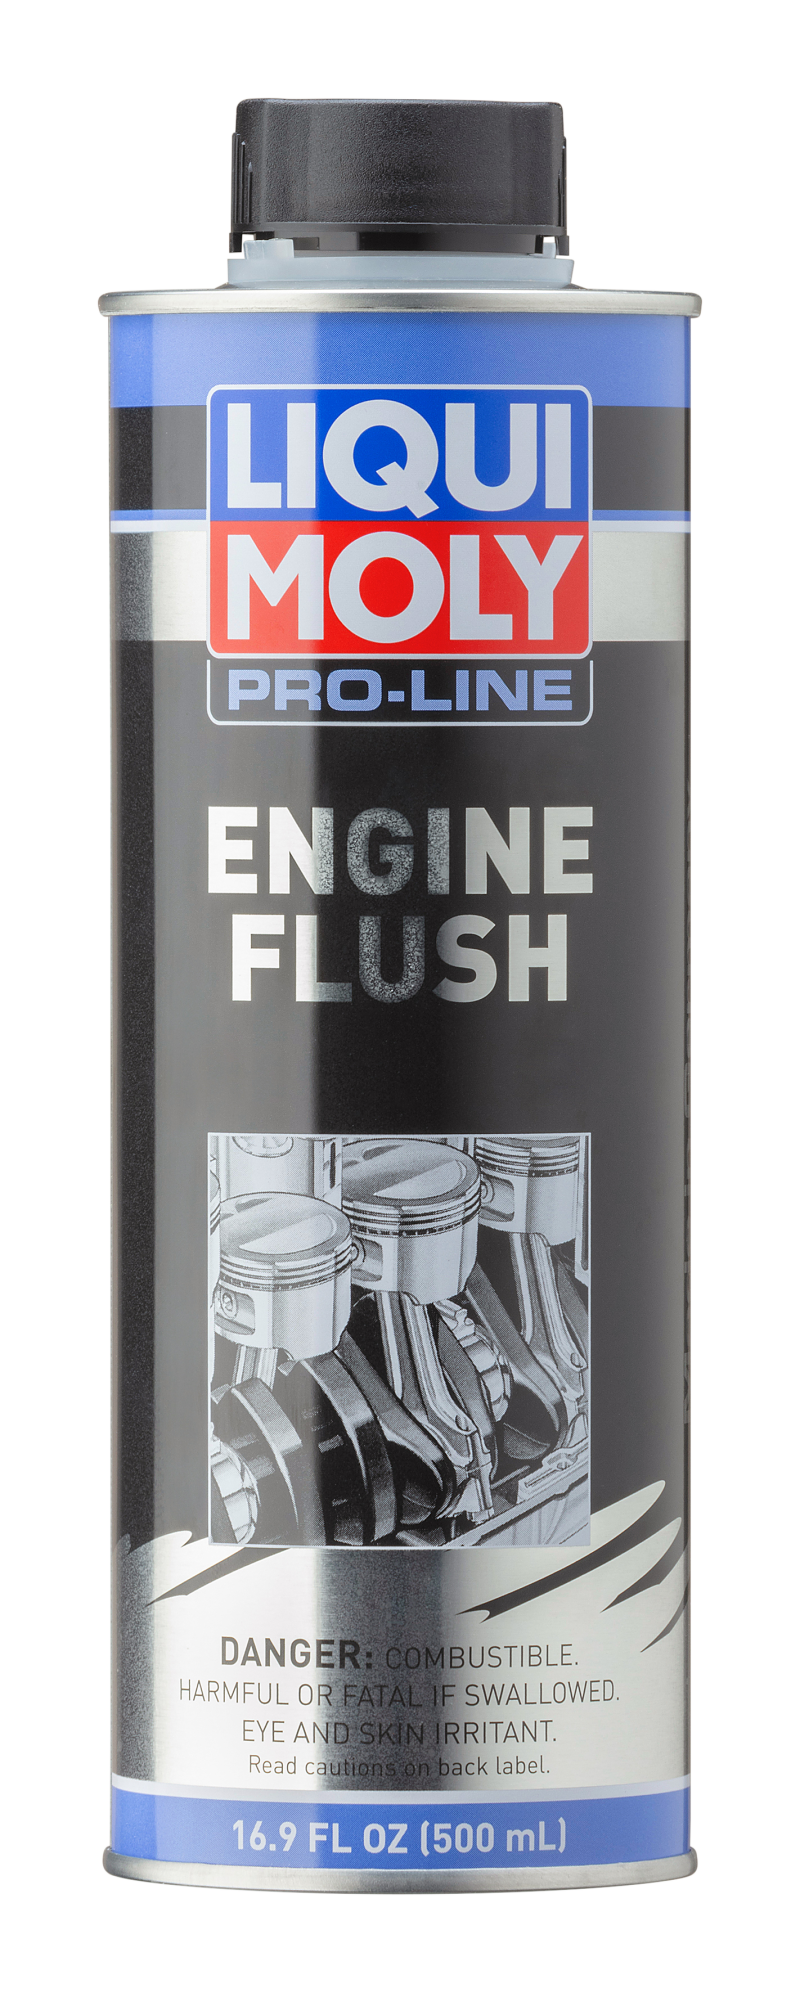 LIQUI MOLY 500mL Pro-Line Engine Flush.